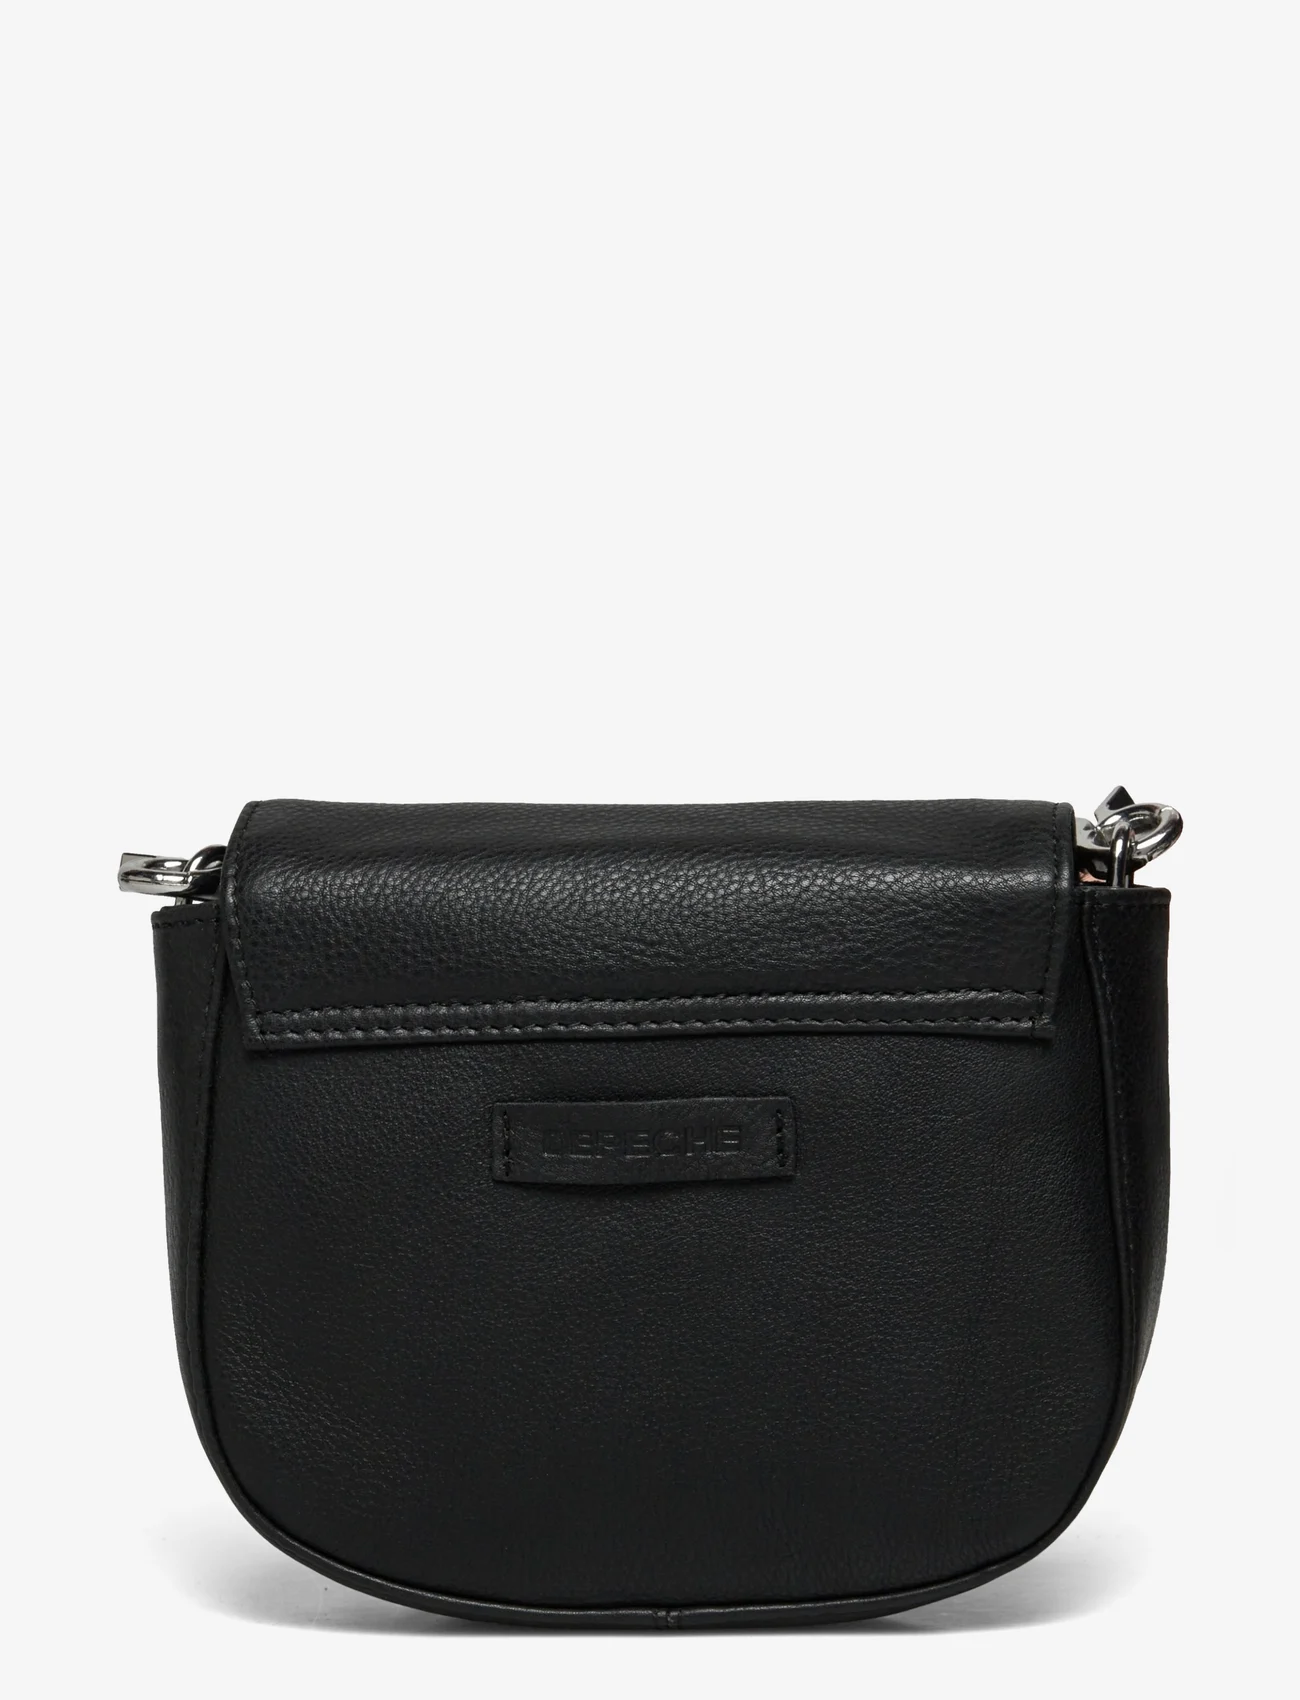 DEPECHE - Small bag / Clutch - ballīšu apģērbs par outlet cenām - 099 black (nero) - 1